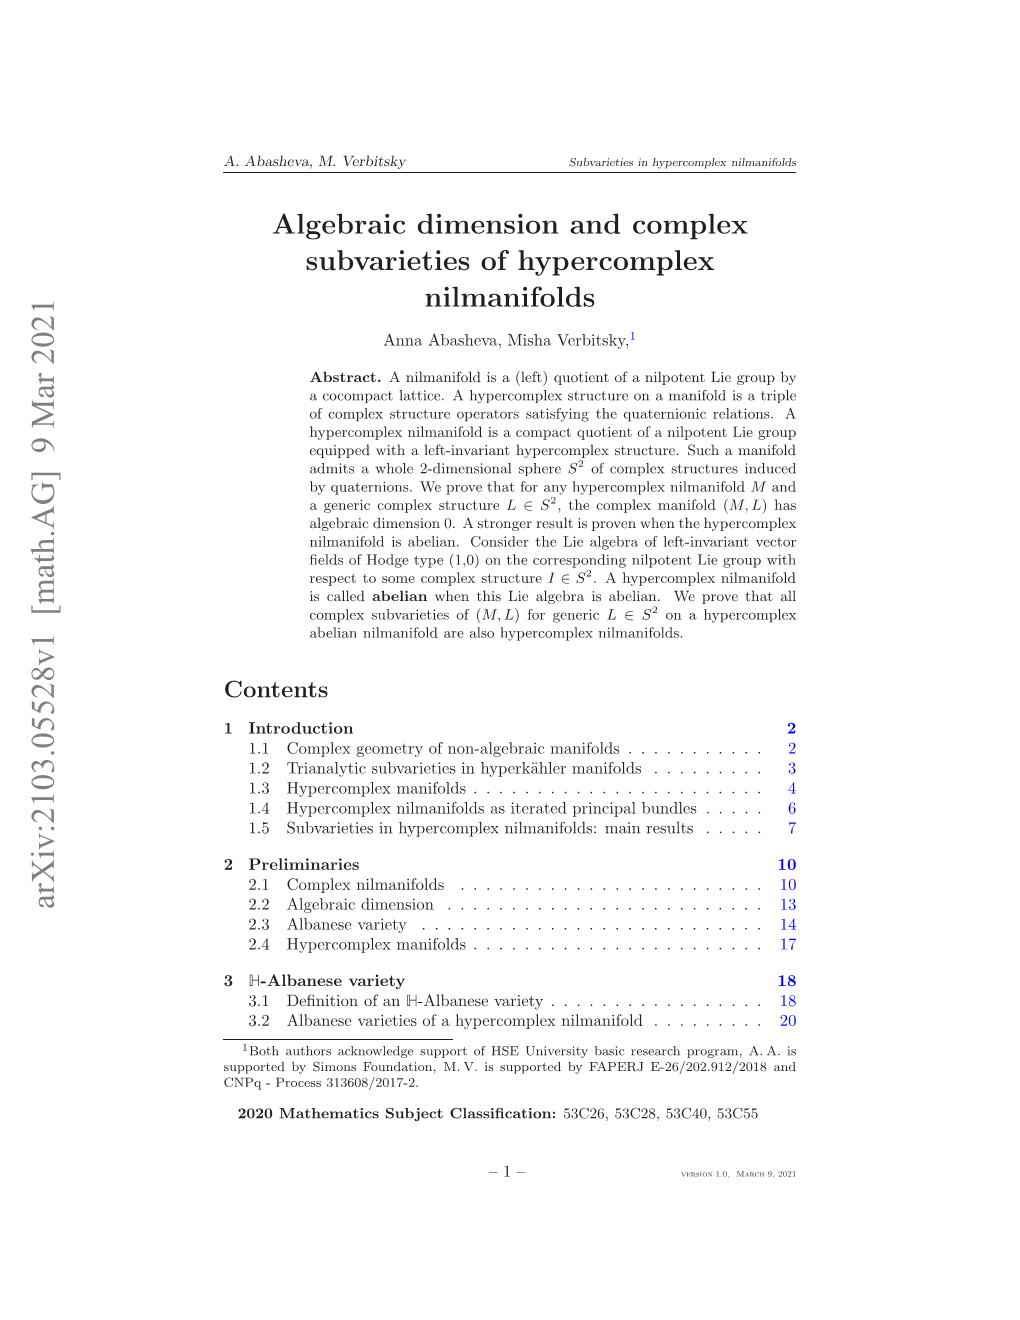 Algebraic Dimension and Complex Subvarieties of Hypercomplex